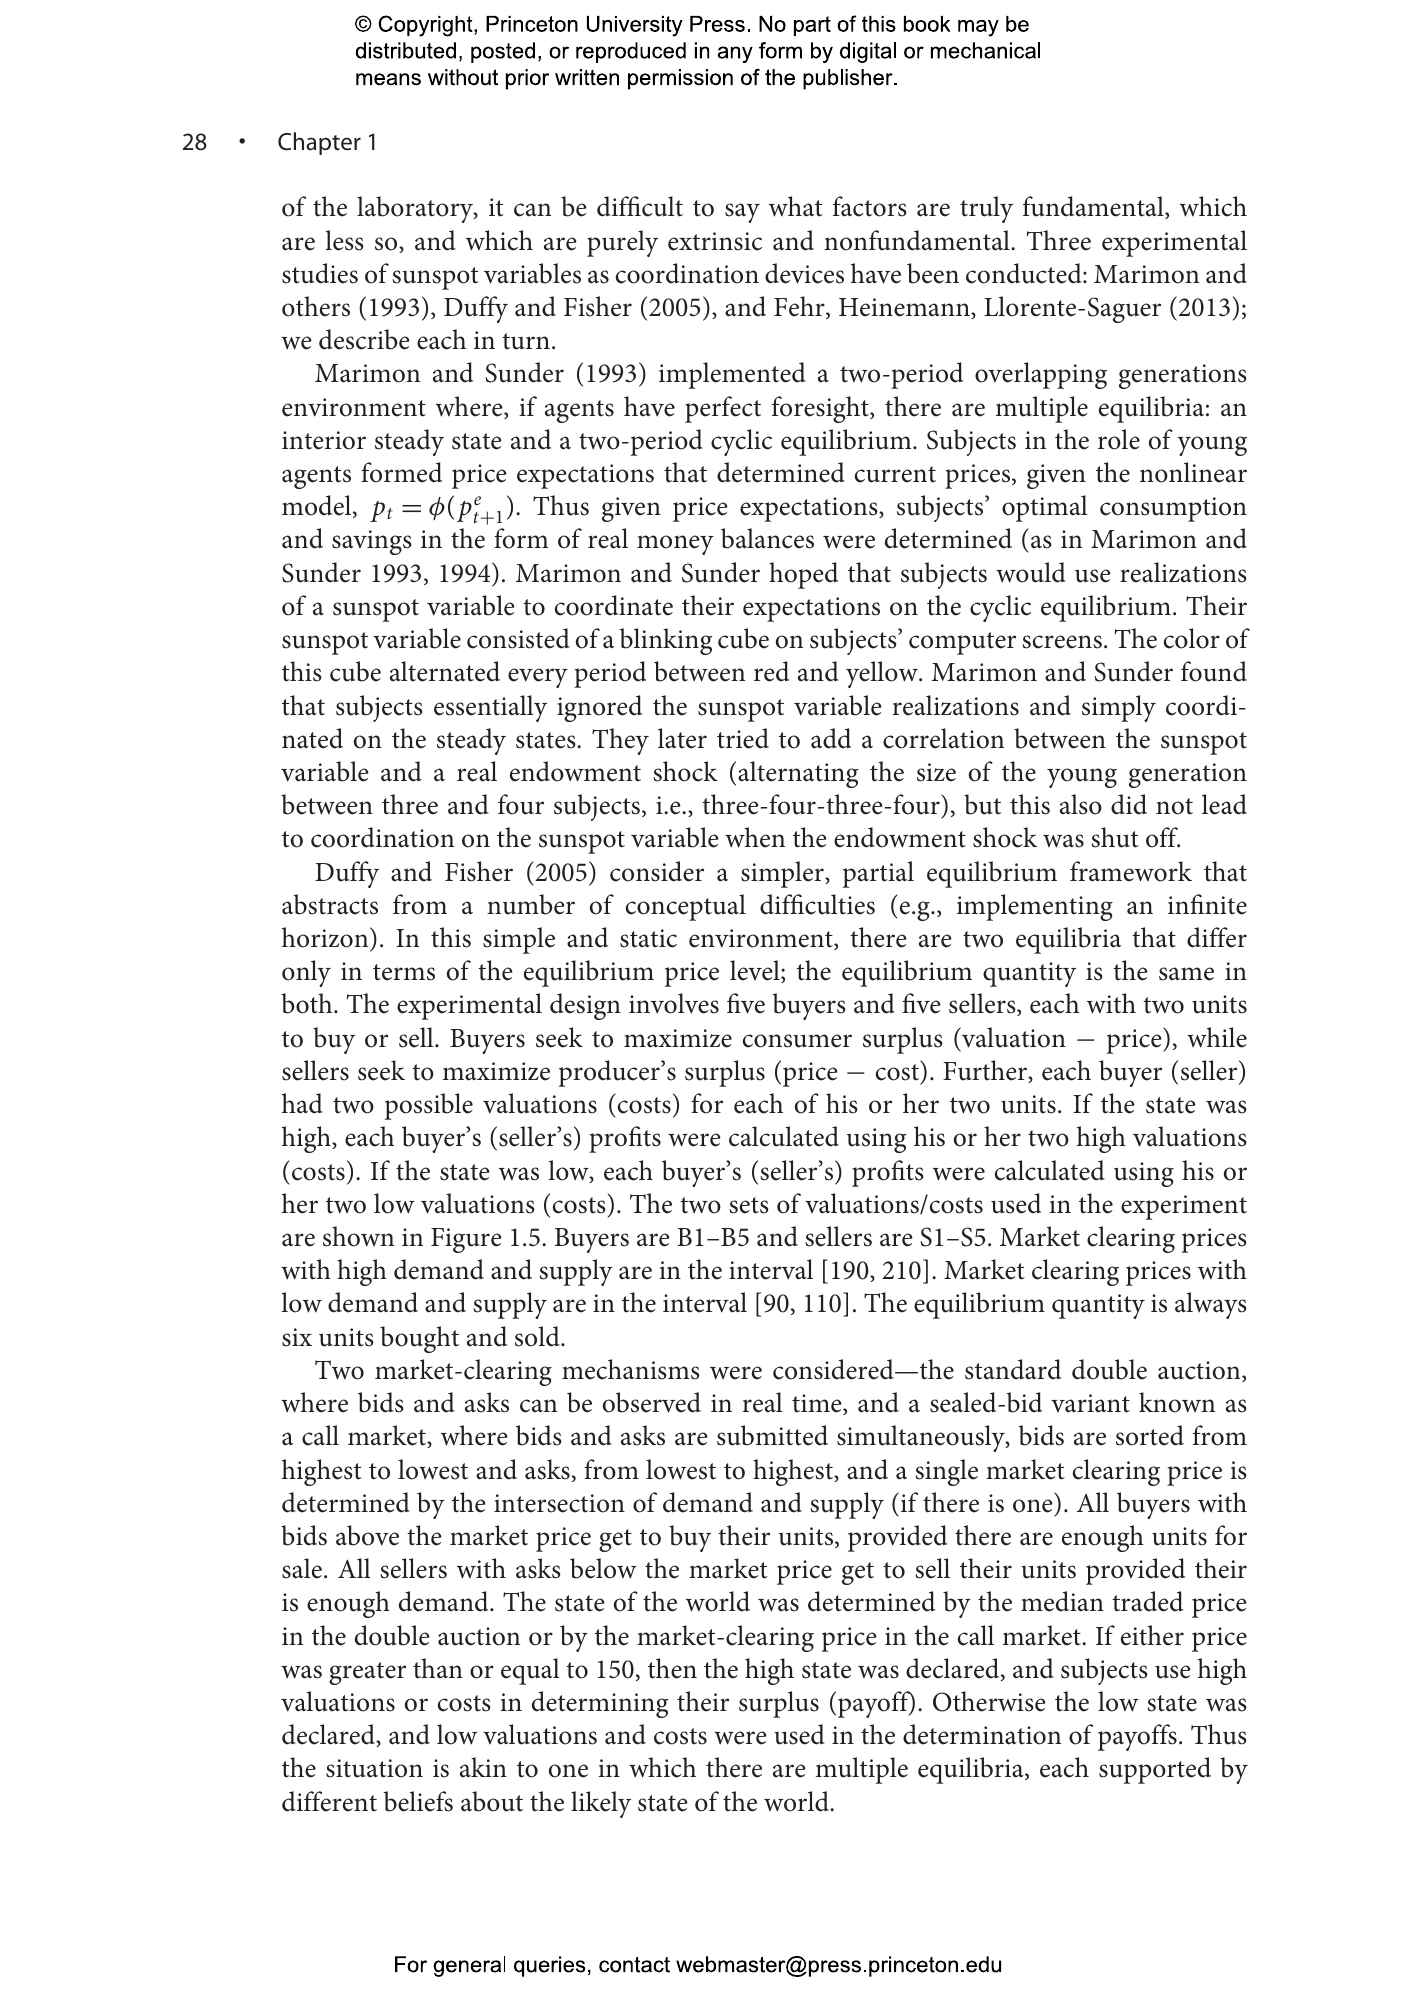 The Handbook of Experimental Economics, Volume 2 | Princeton 